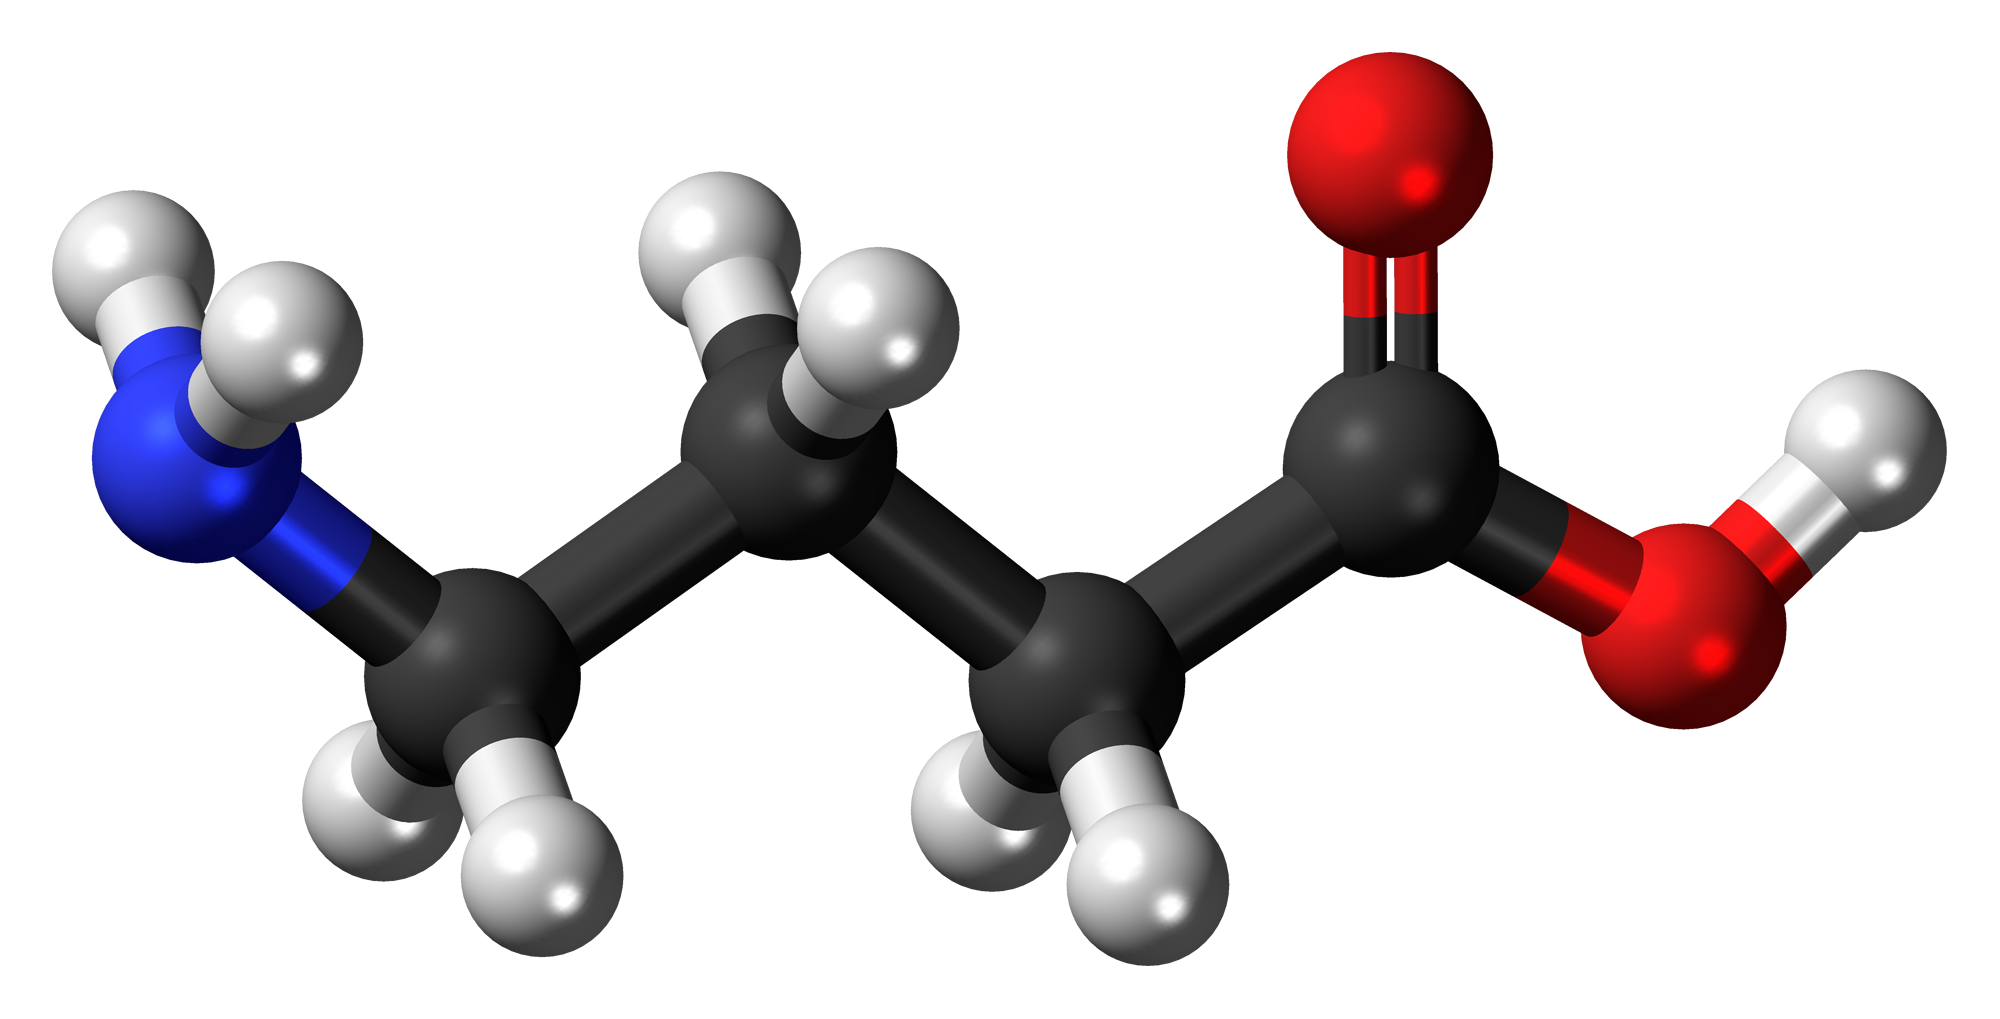 A γ-aminovajsav vagy gamma-aminovajsav, általában GABA rövidítéssel ismert, a γ-aminovajsav leggyakoribb formája.